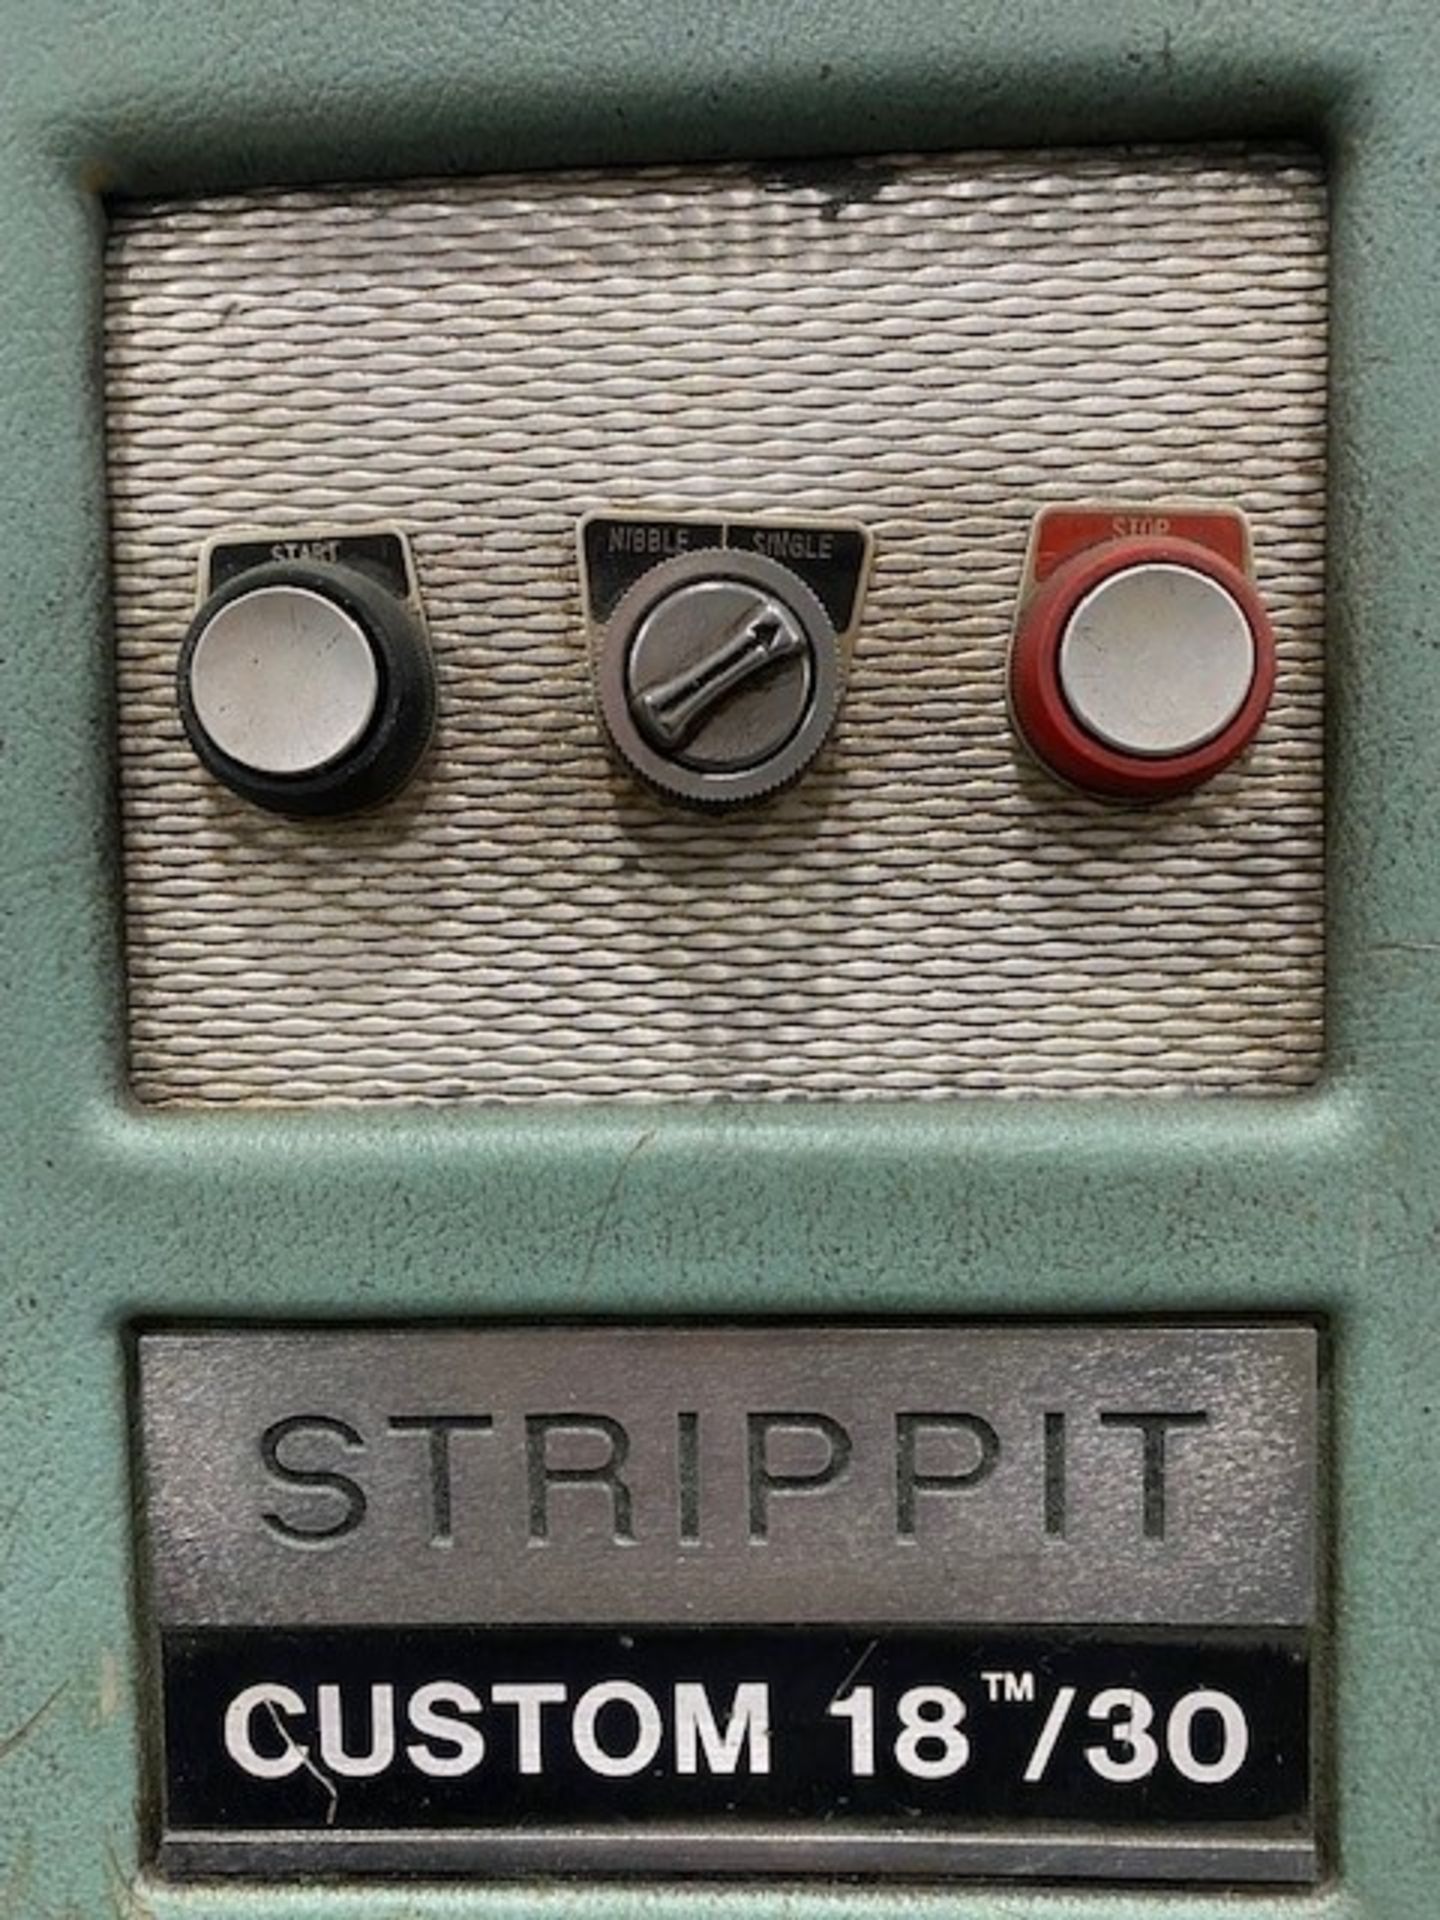 Strippit Custom 18/30 Model 91680 300, Punch Press Machine - Image 4 of 5